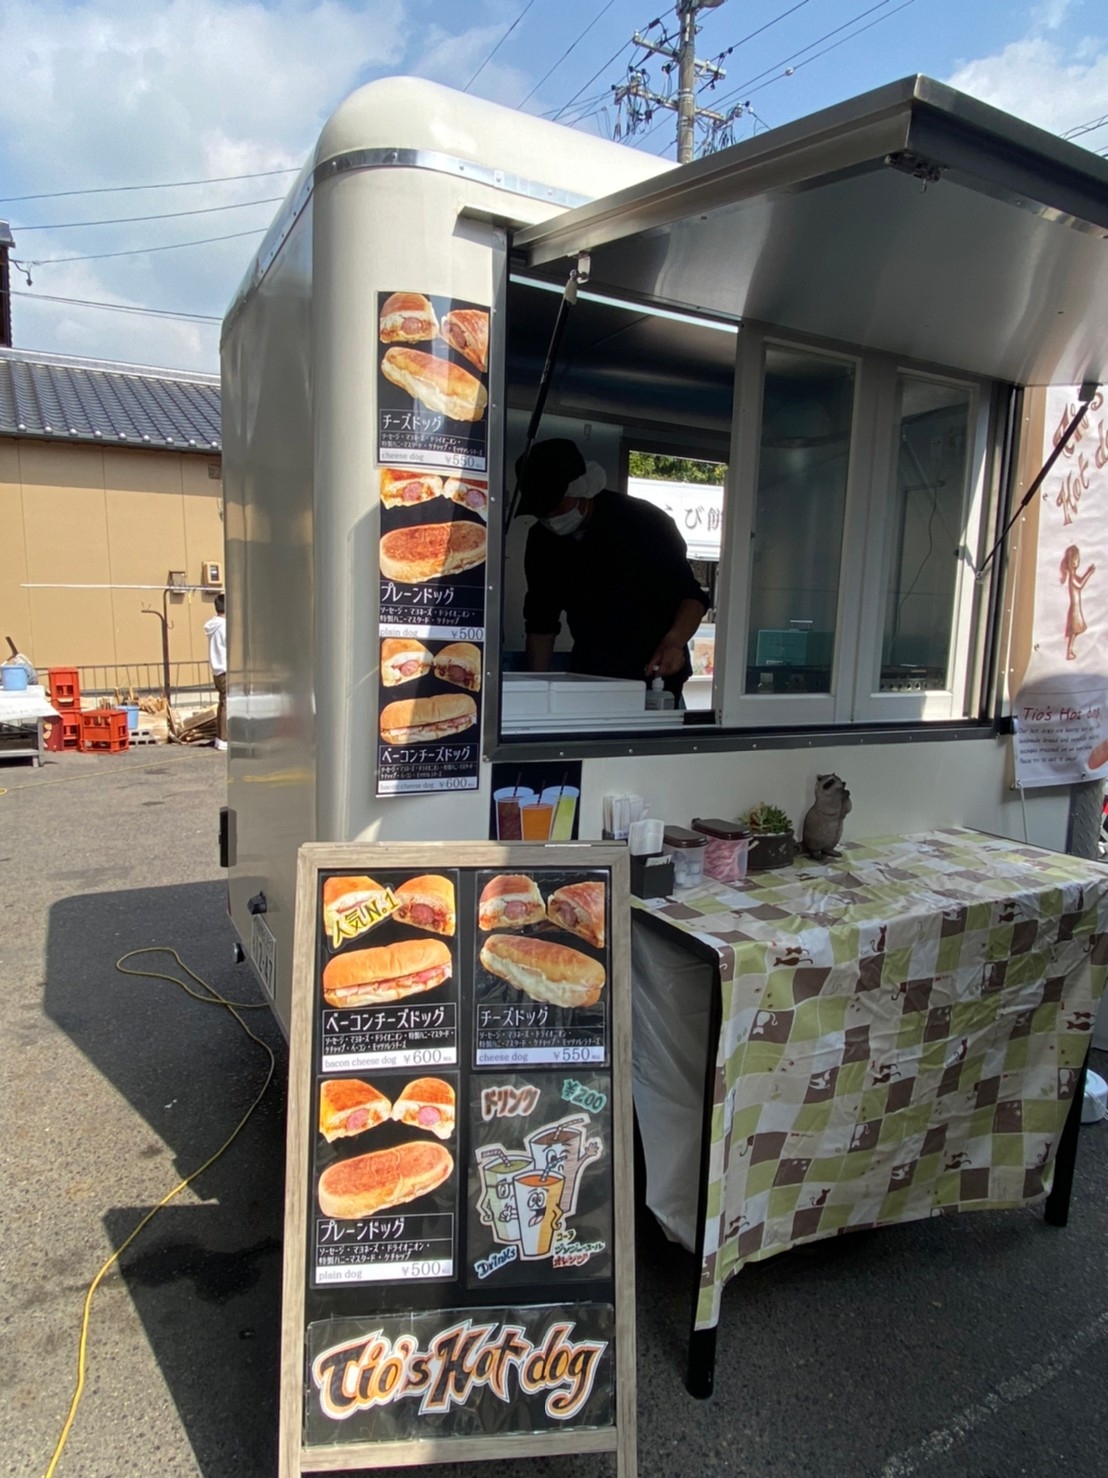 Tio's Hot Dog ,東海移動販売車組合,移動販売車,キッチンカー,フードトラック,愛知,岐阜,イベント,ホットドッグ